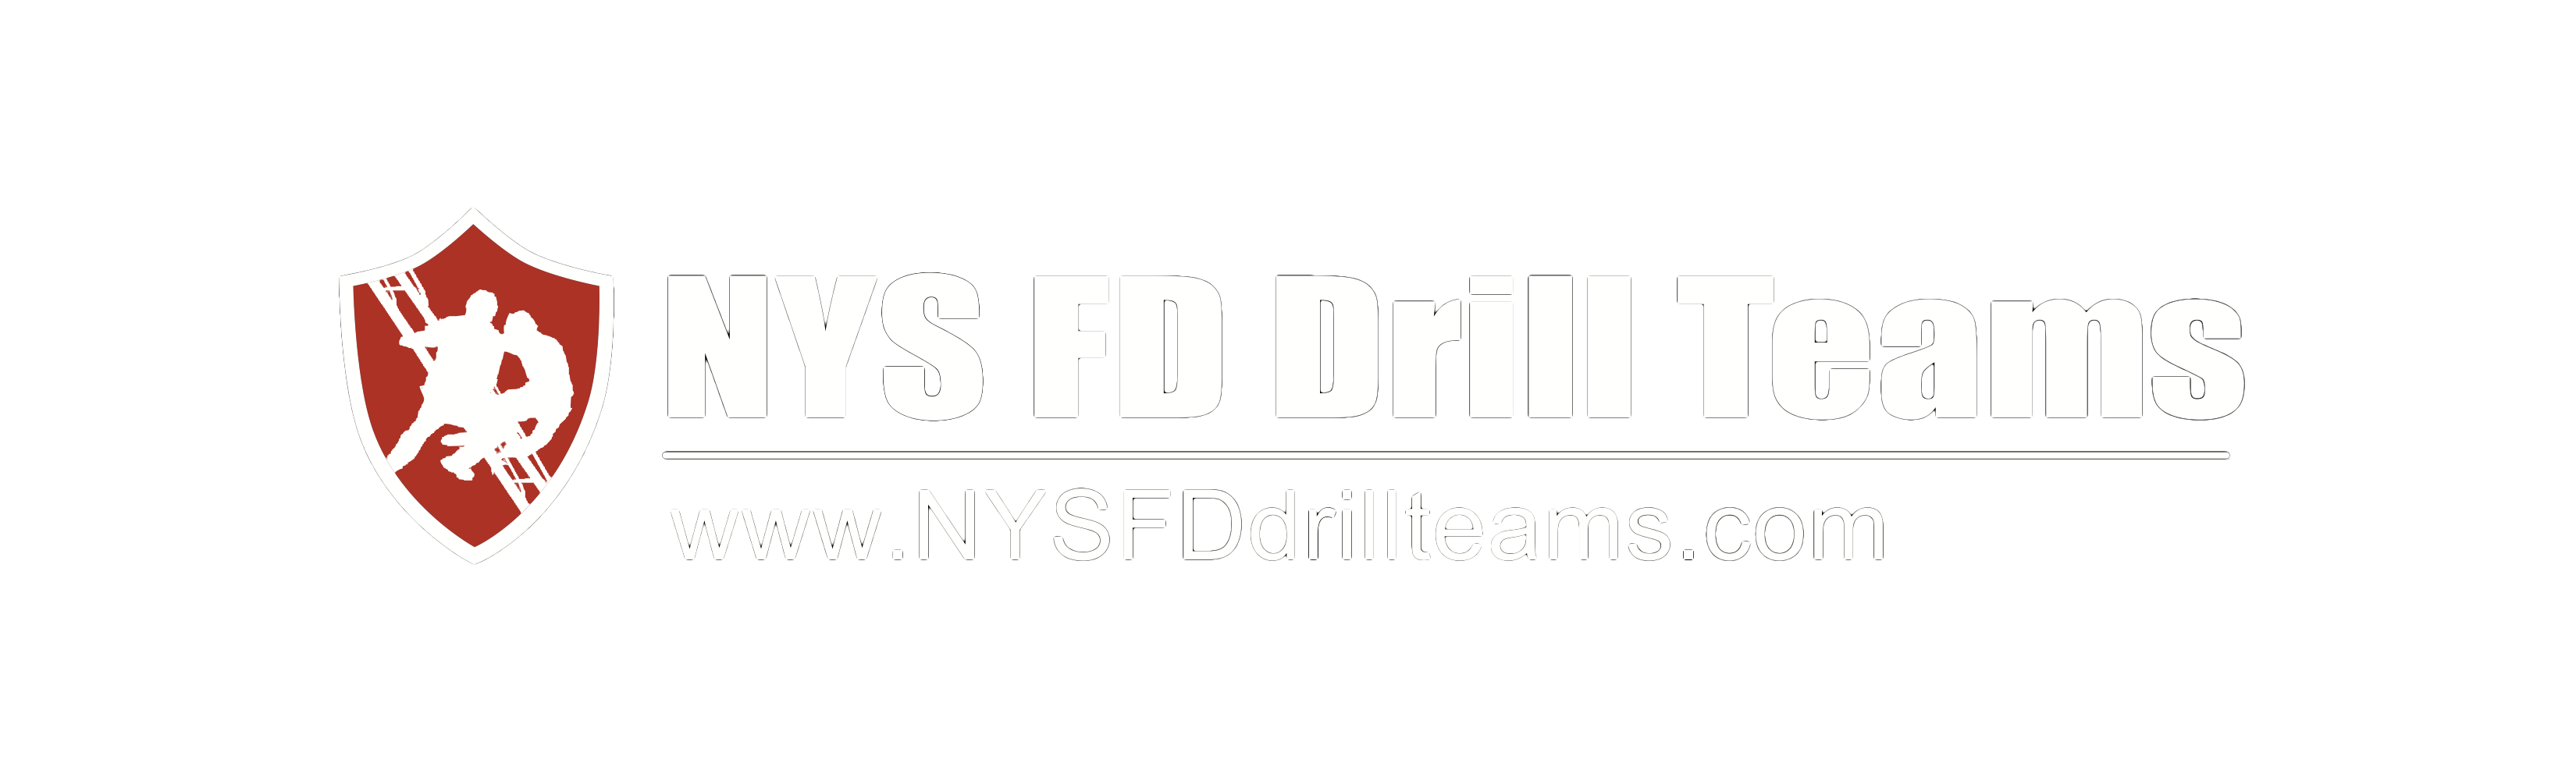 NYS FD Drill Teams